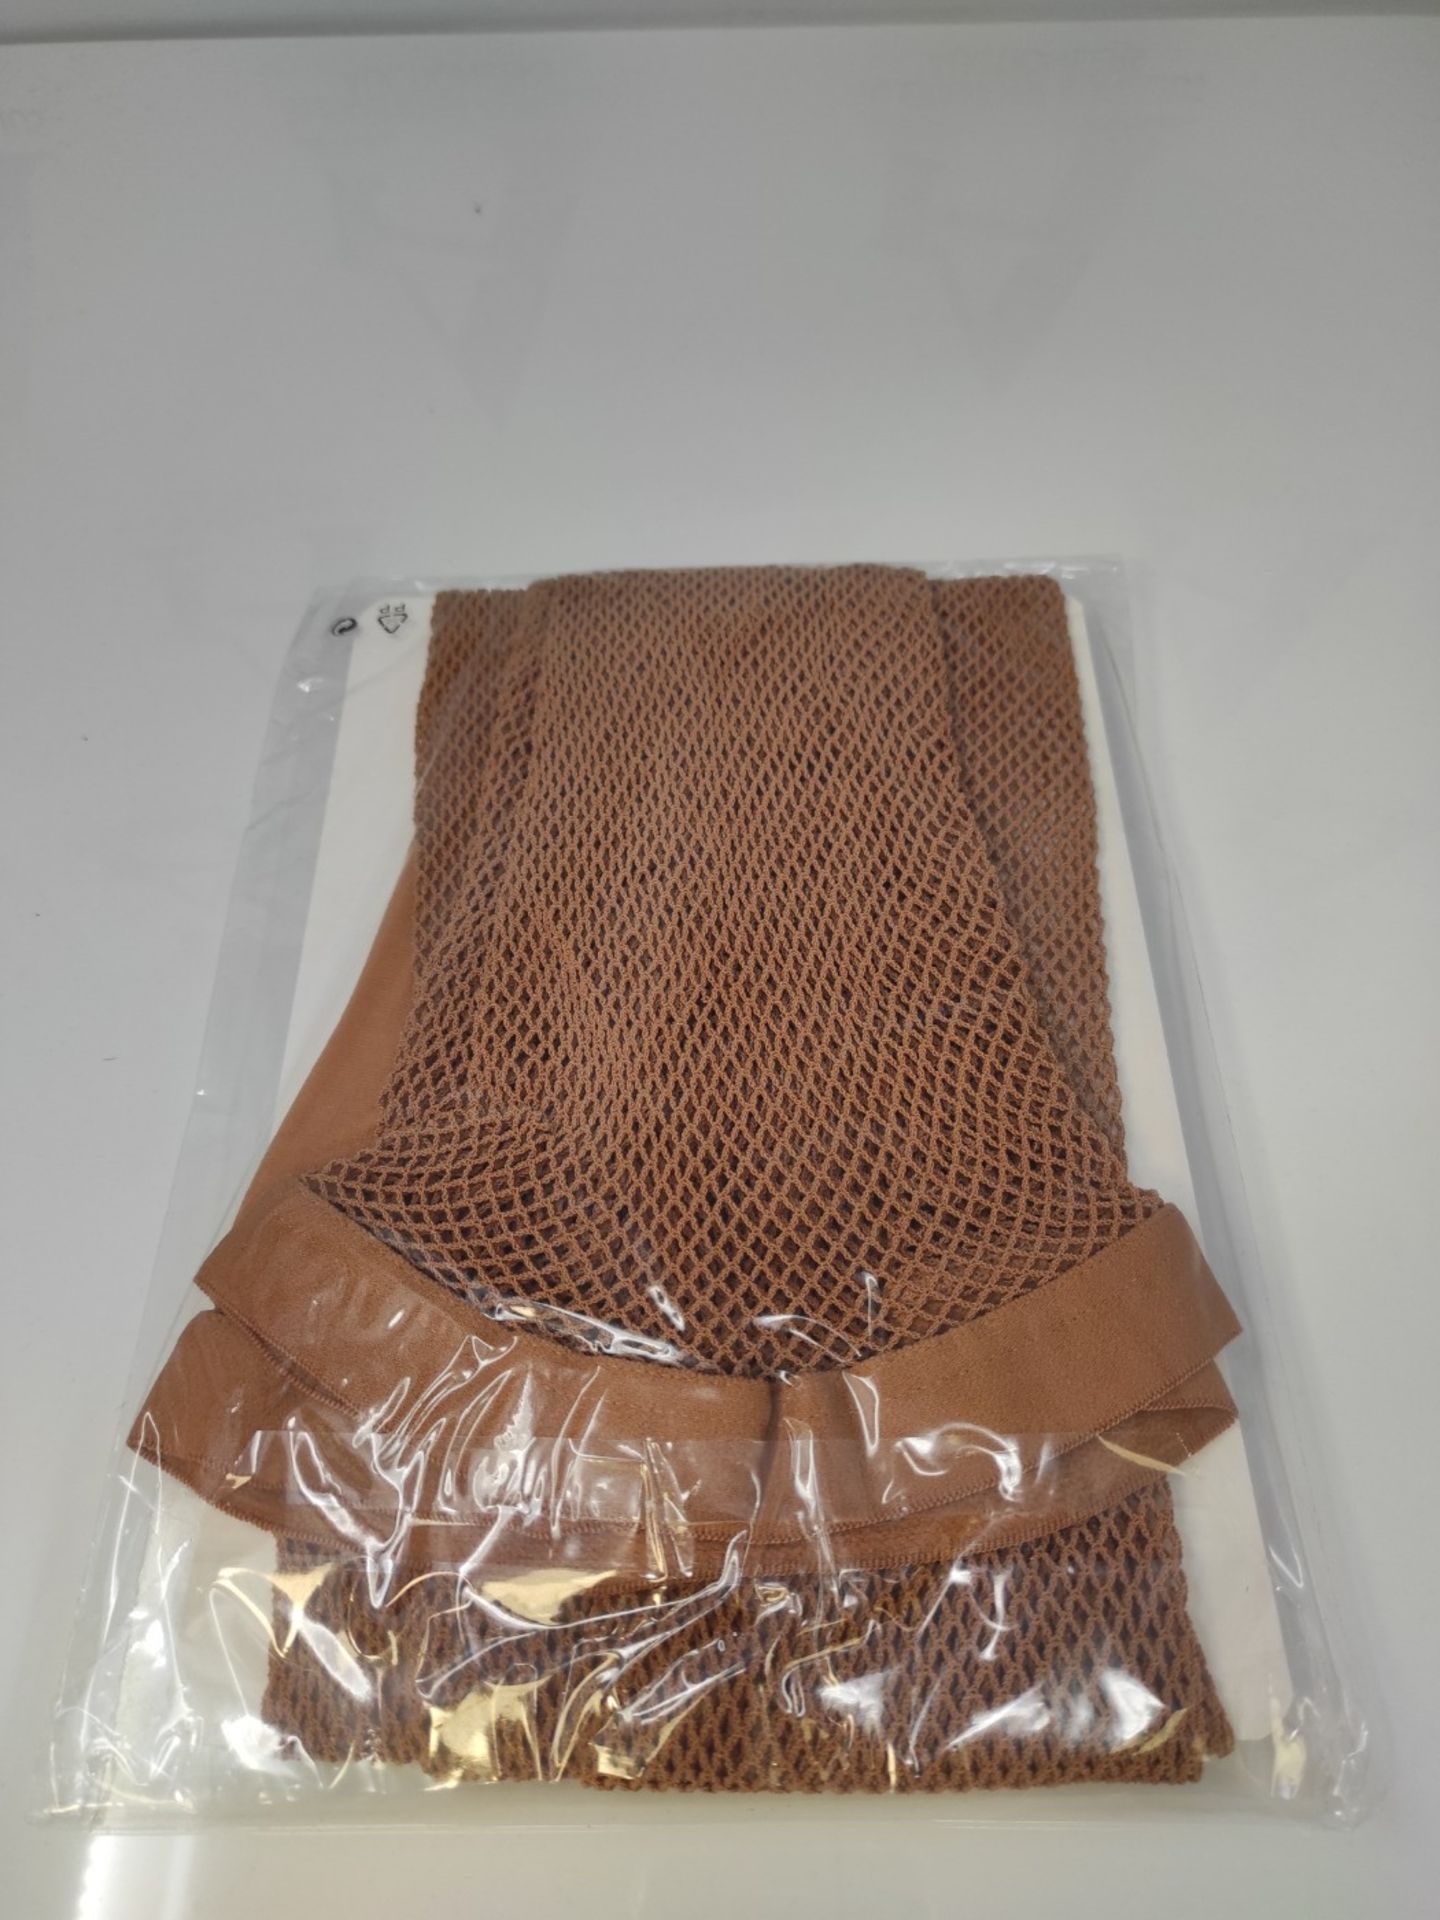 Capezio Women's Professional Fishnet Seamless Tight Stockings, Suntan, Medium/High - Image 3 of 3